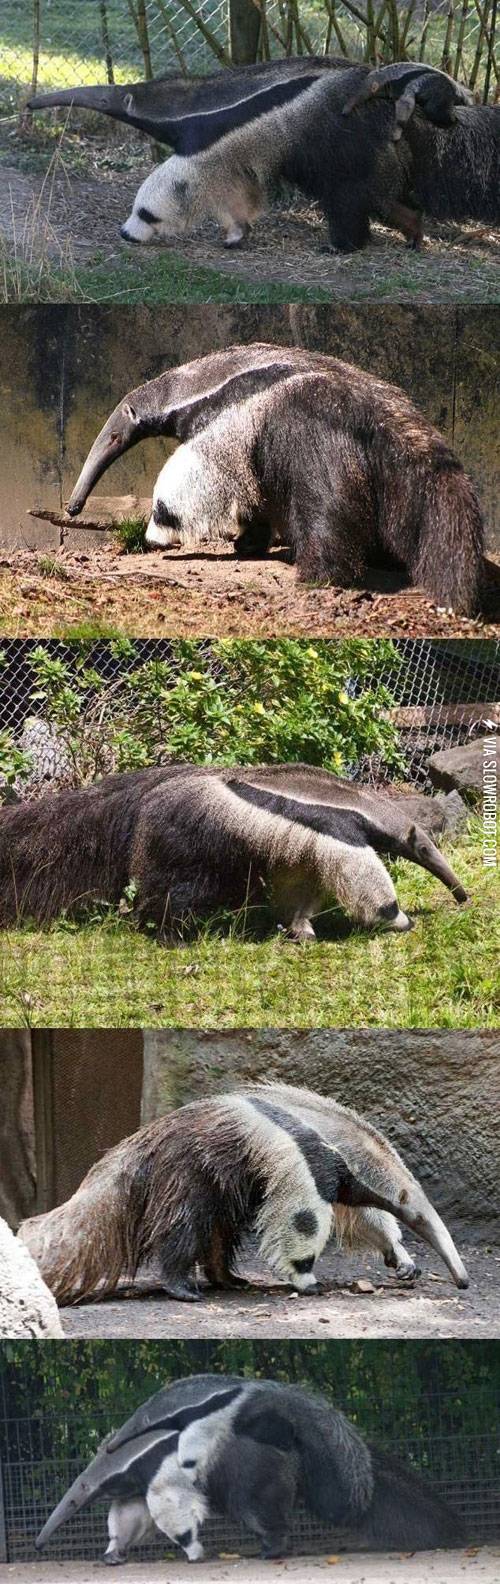 The+anteater+panda.